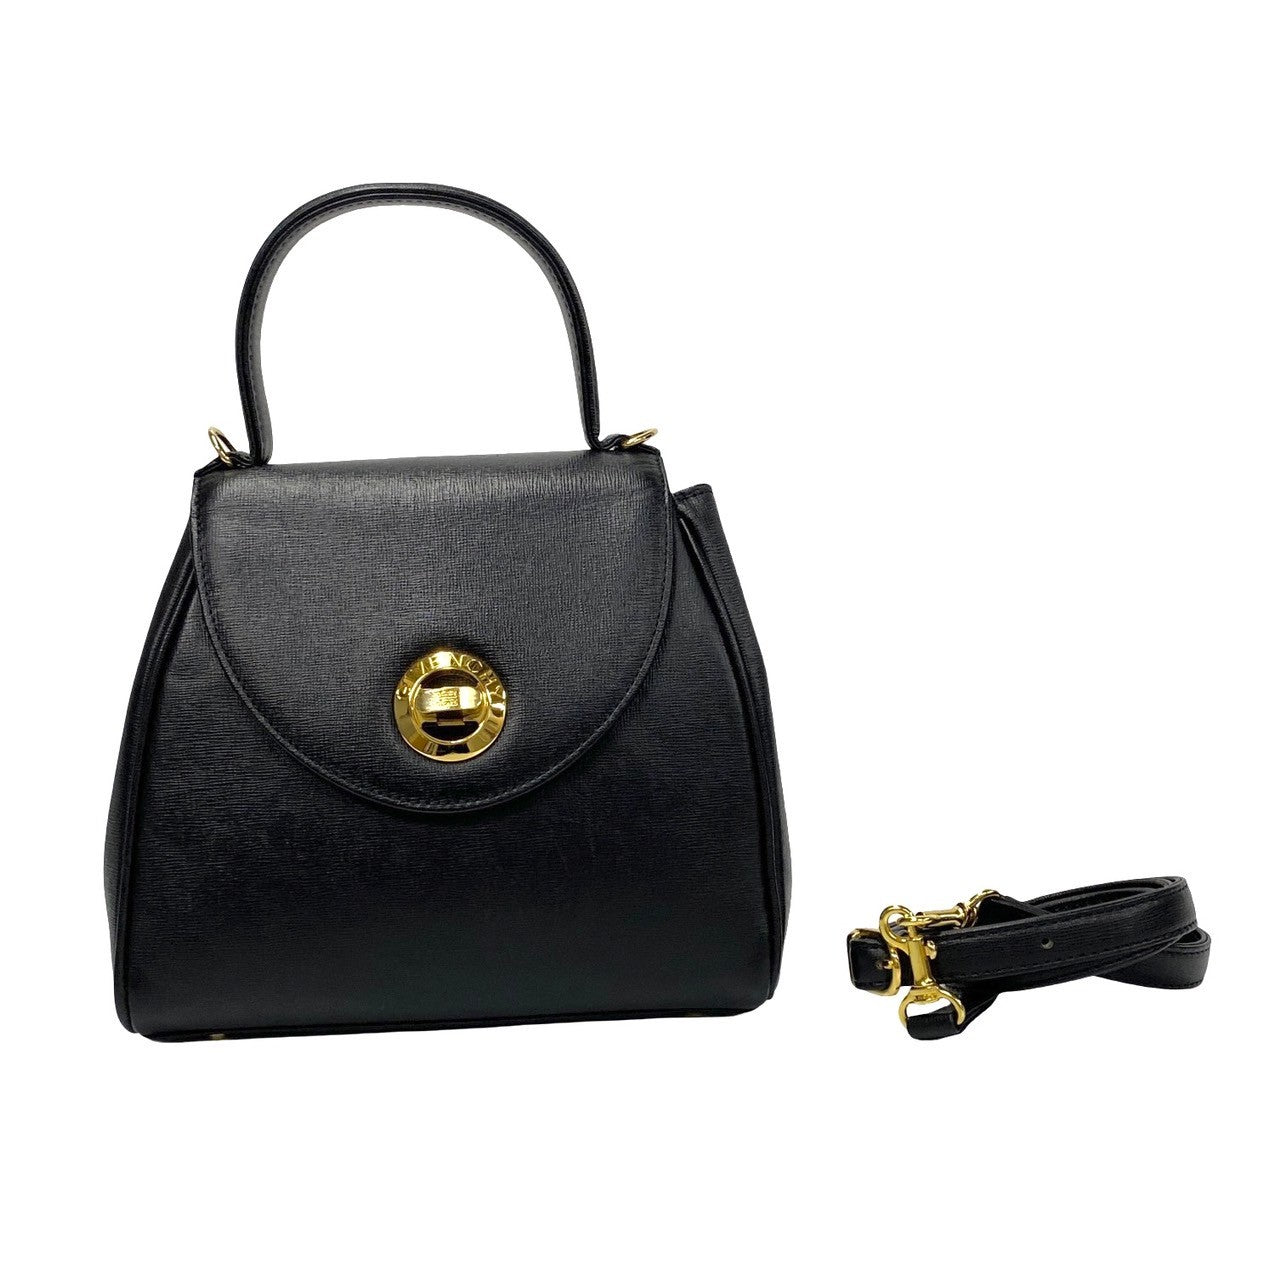 Givenchy Leather Handbag Leather Handbag in Good condition